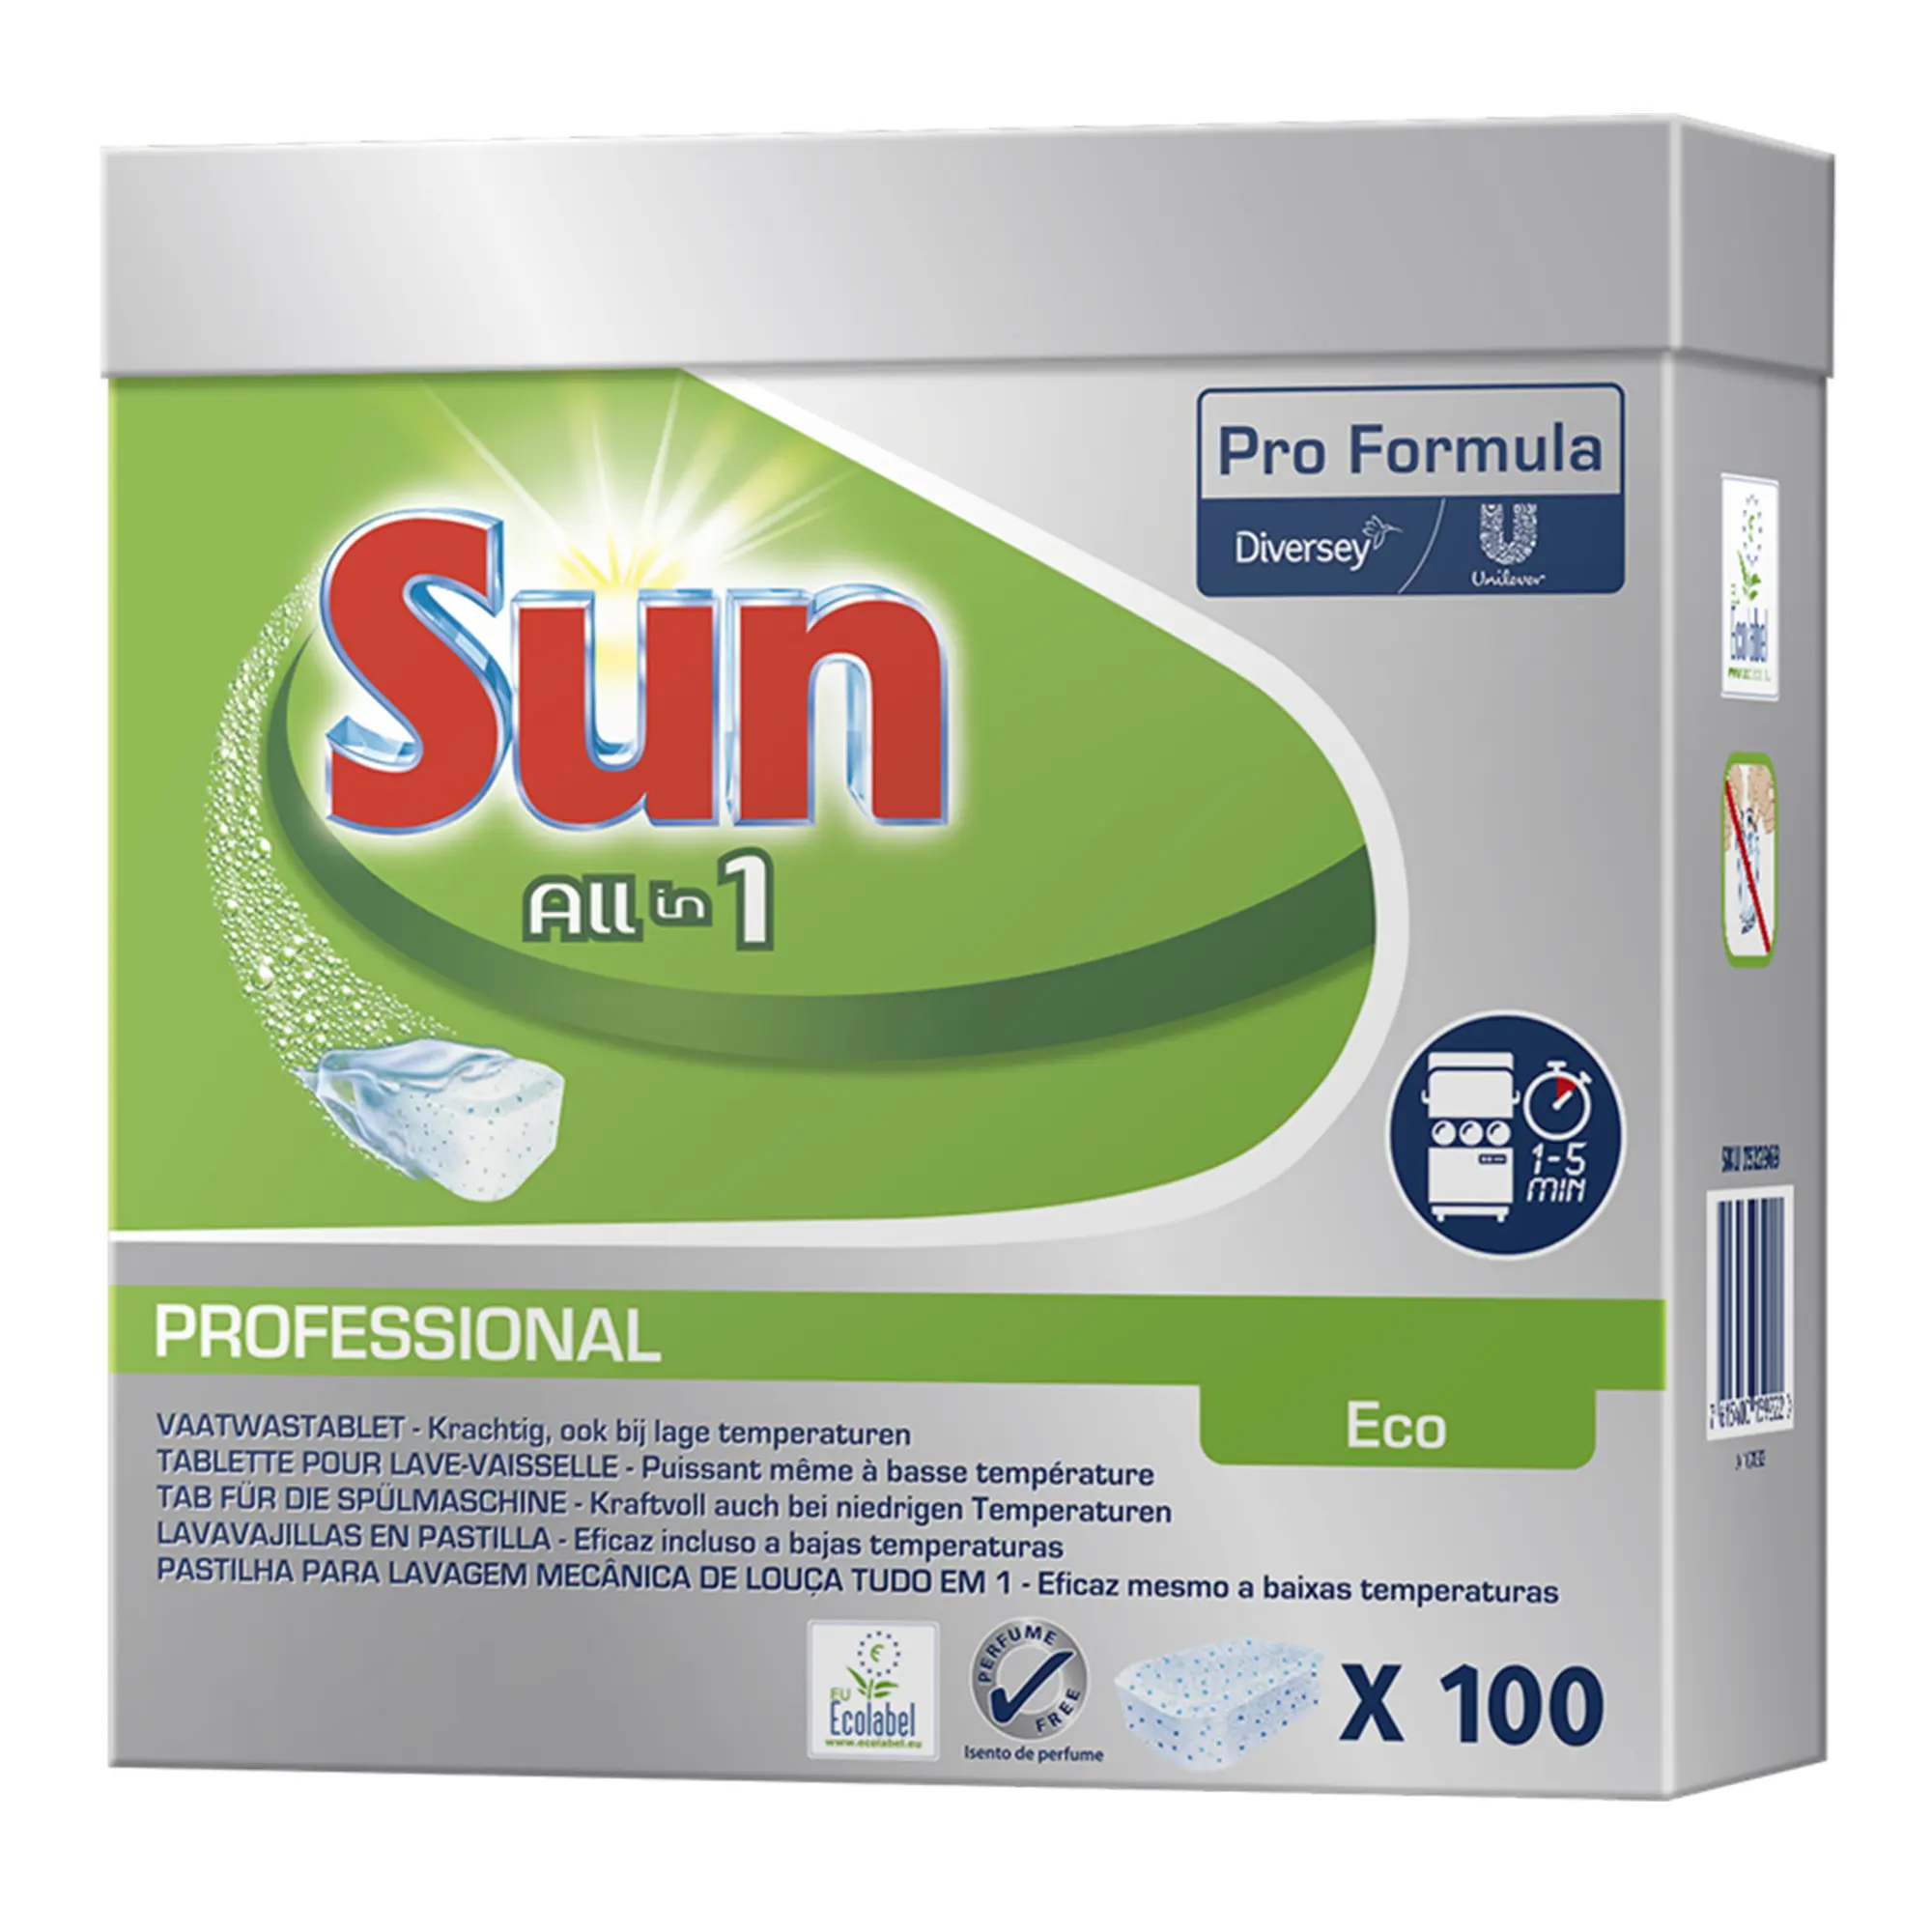 Sun Professional All in 1 Eco Geschirrreiniger-Tabs 100 Stück 7522969_1